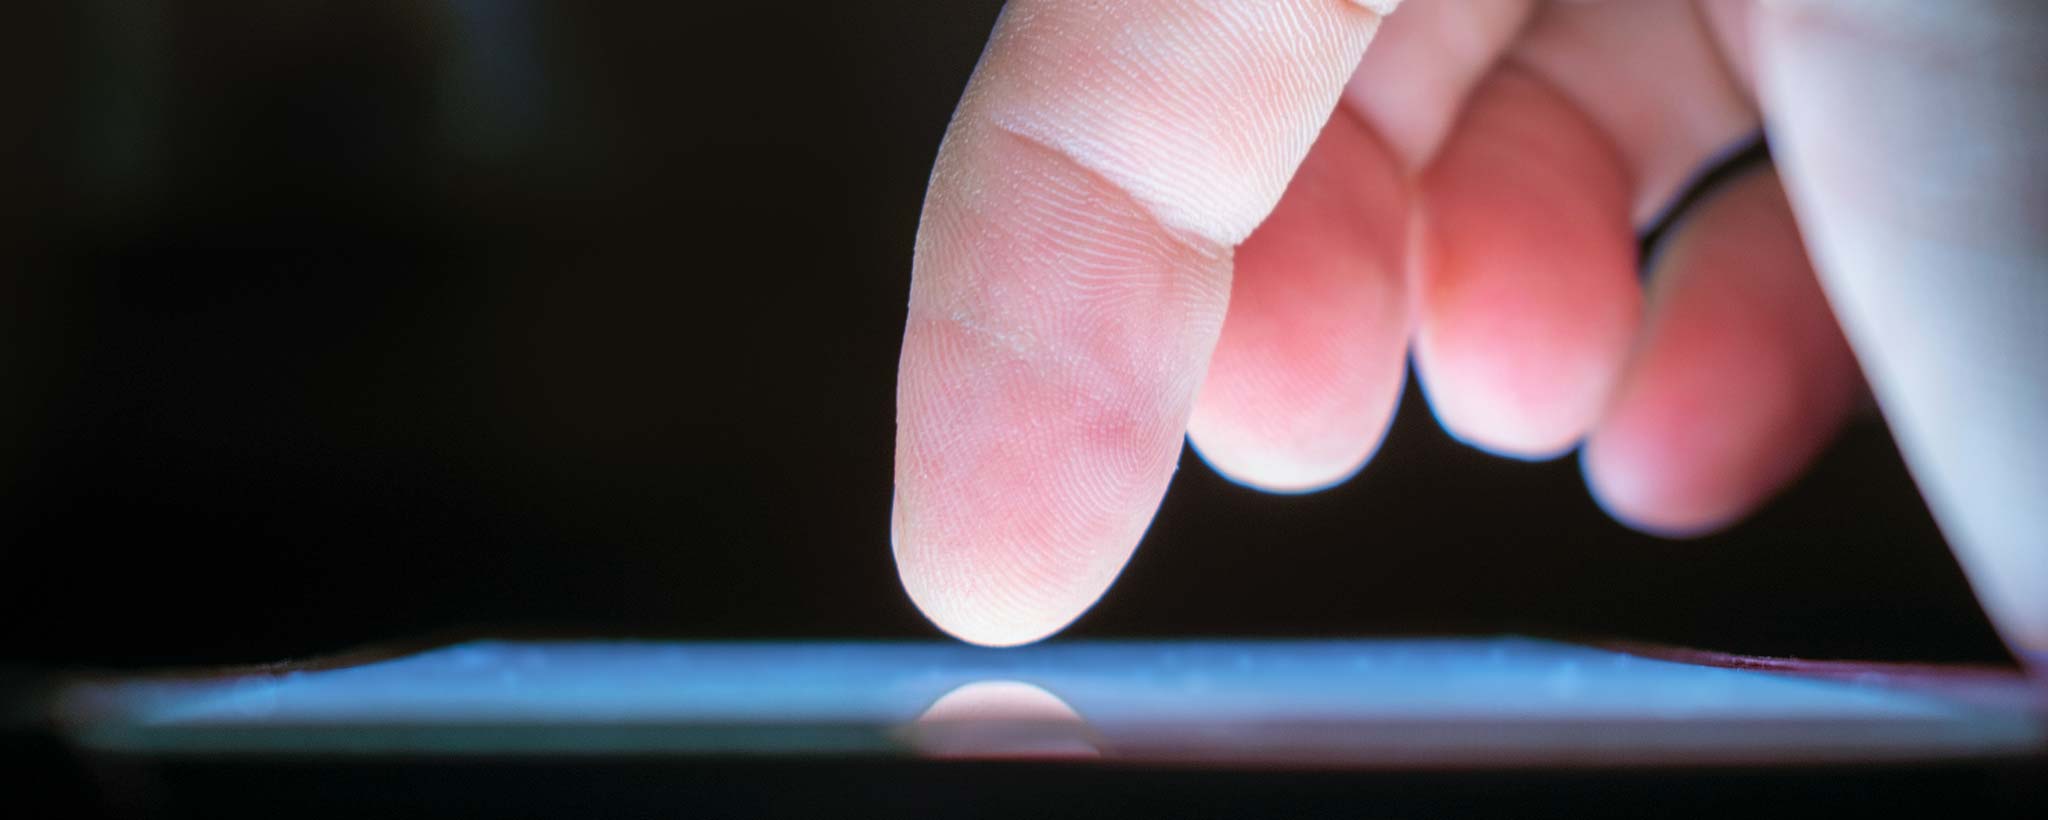 'Finger tapping digital screen'